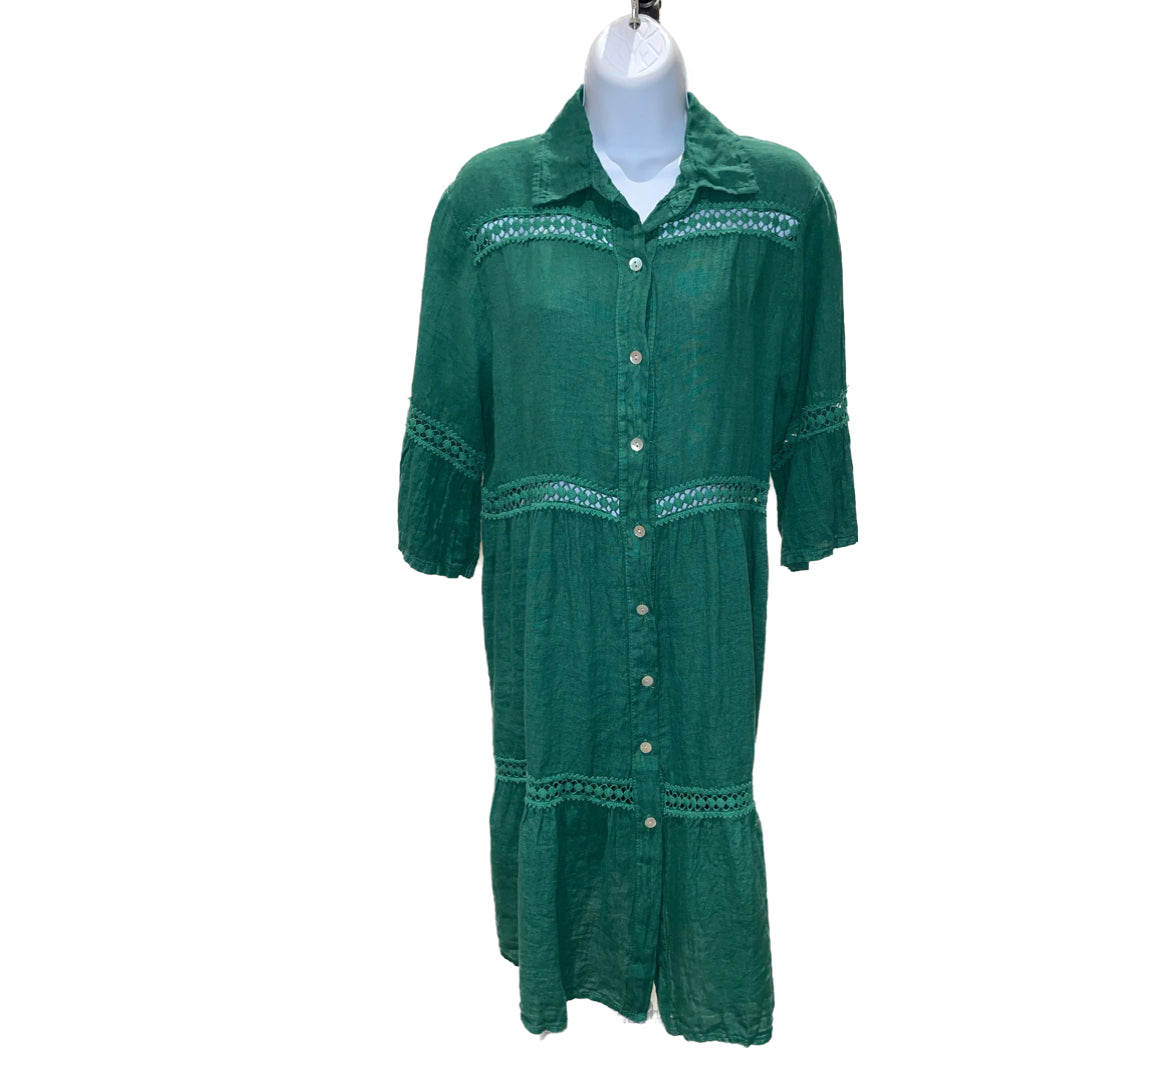 MINI L/S Linen Dress w Crochet Details - Green